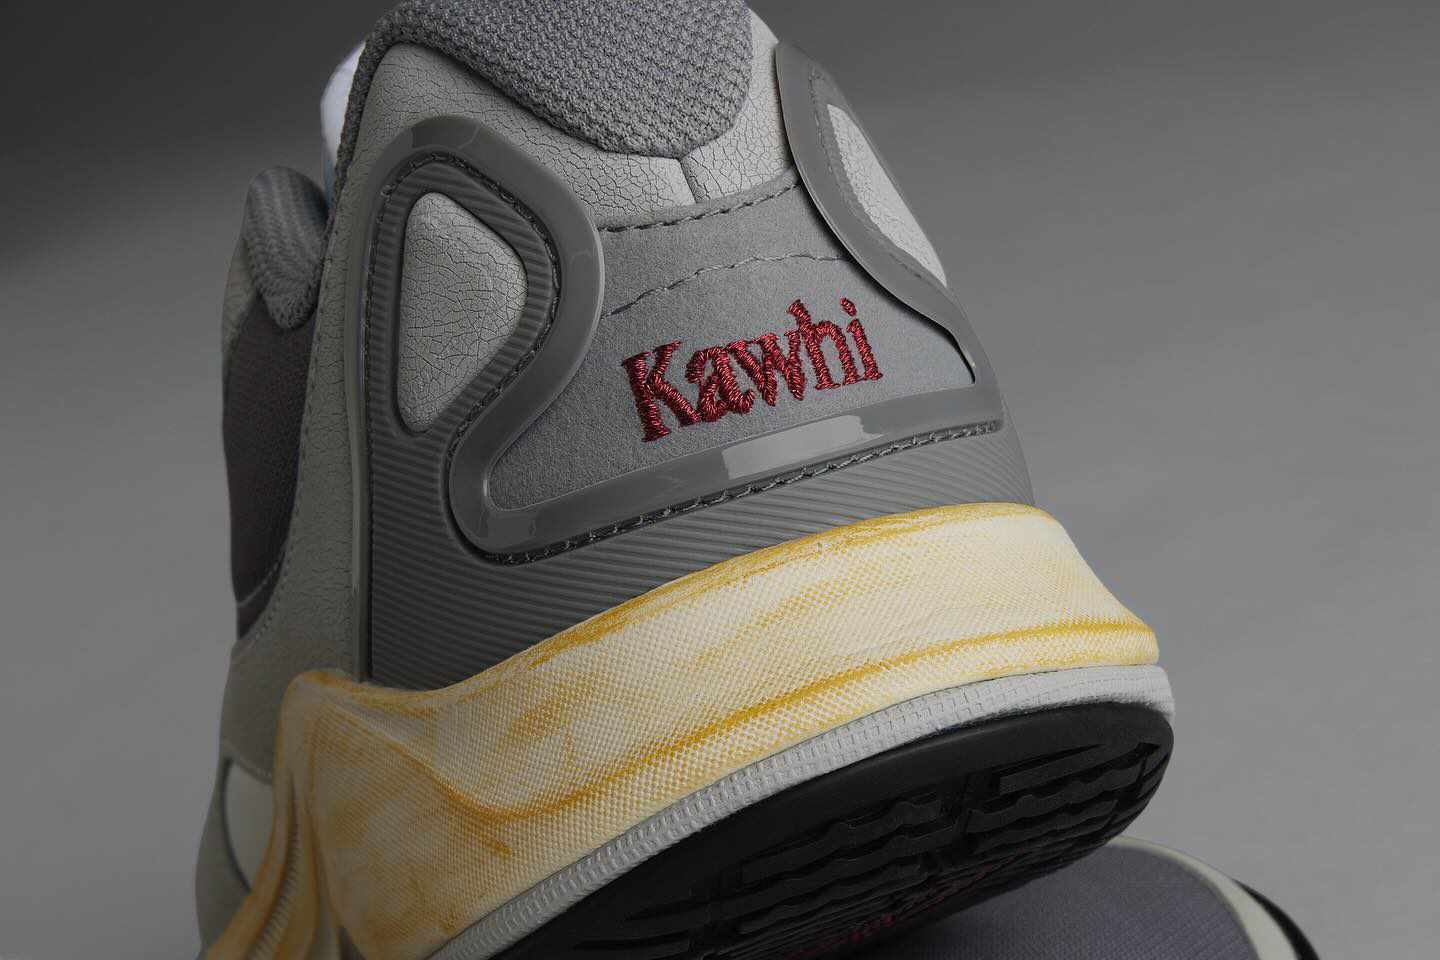 New Balance Kawhi Leonard 4 sneakers in grey day colorway